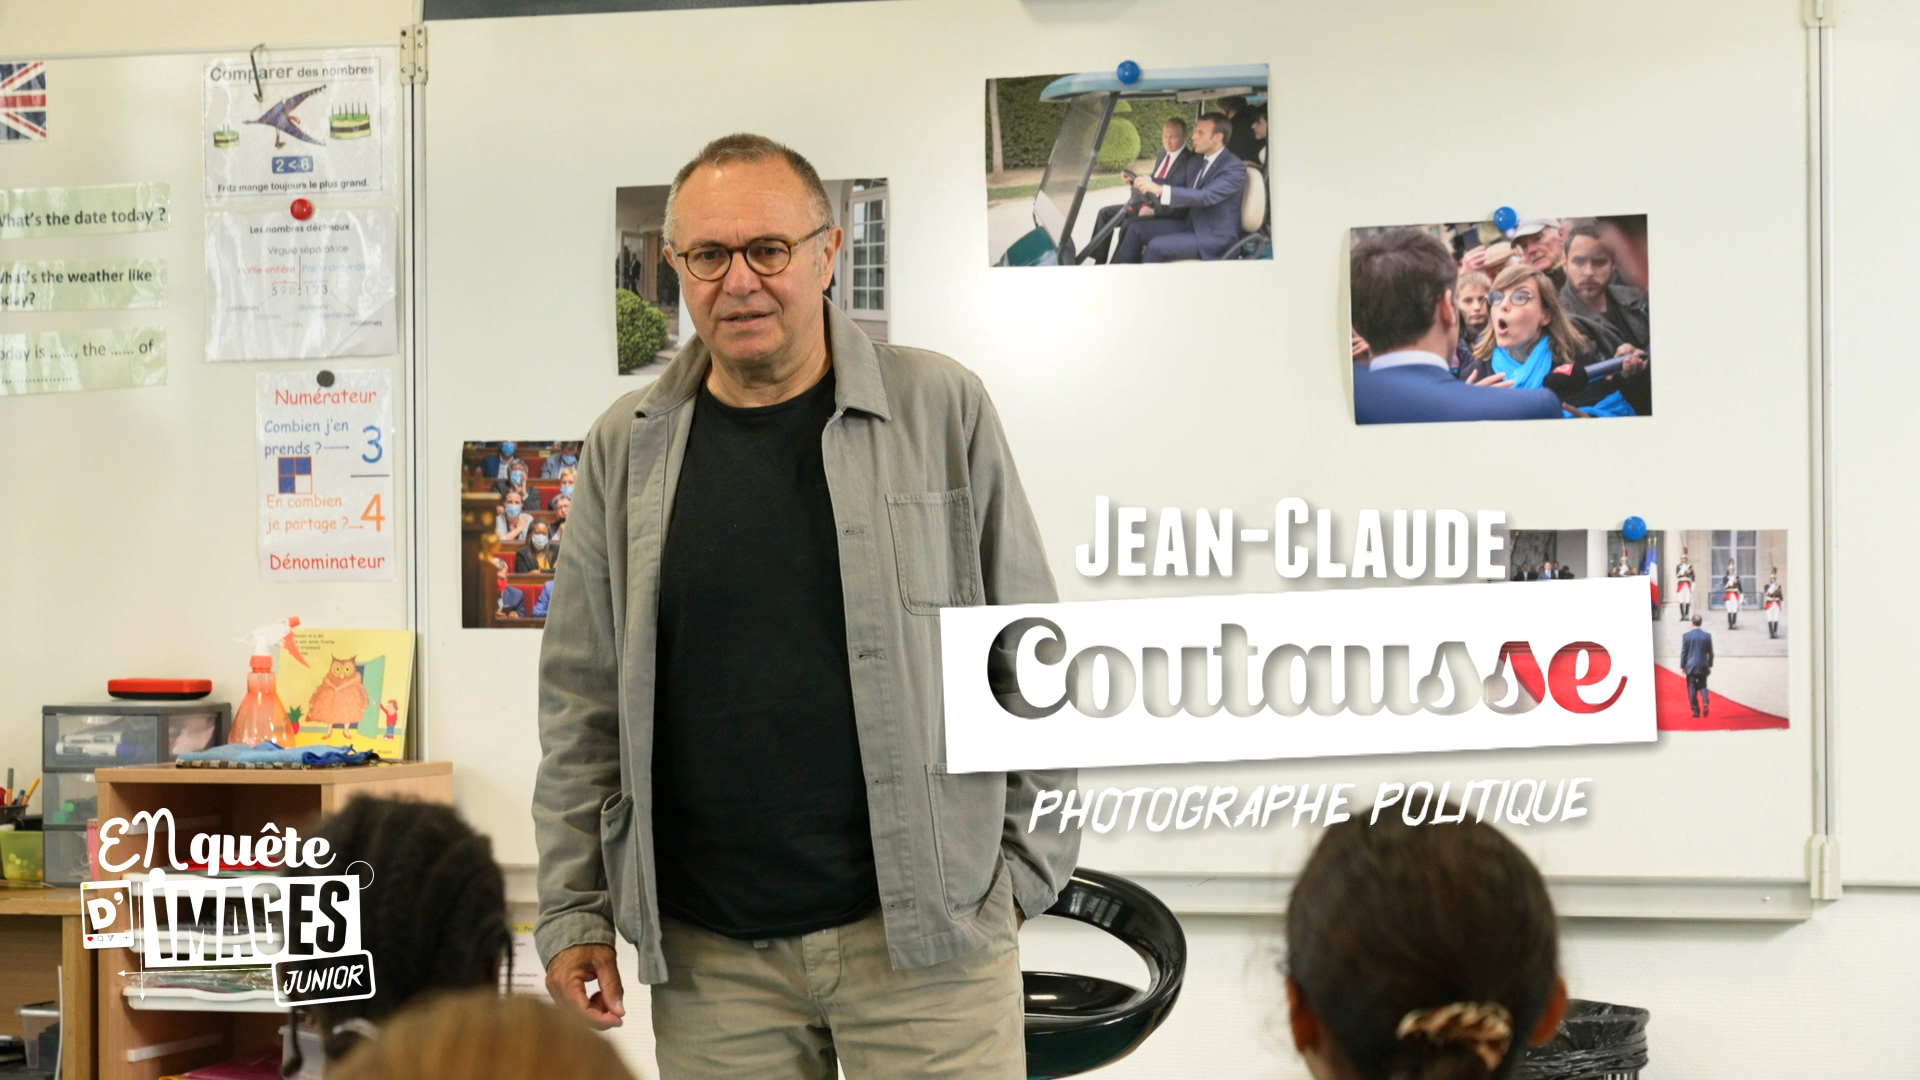 Jean-Claude Coutausse